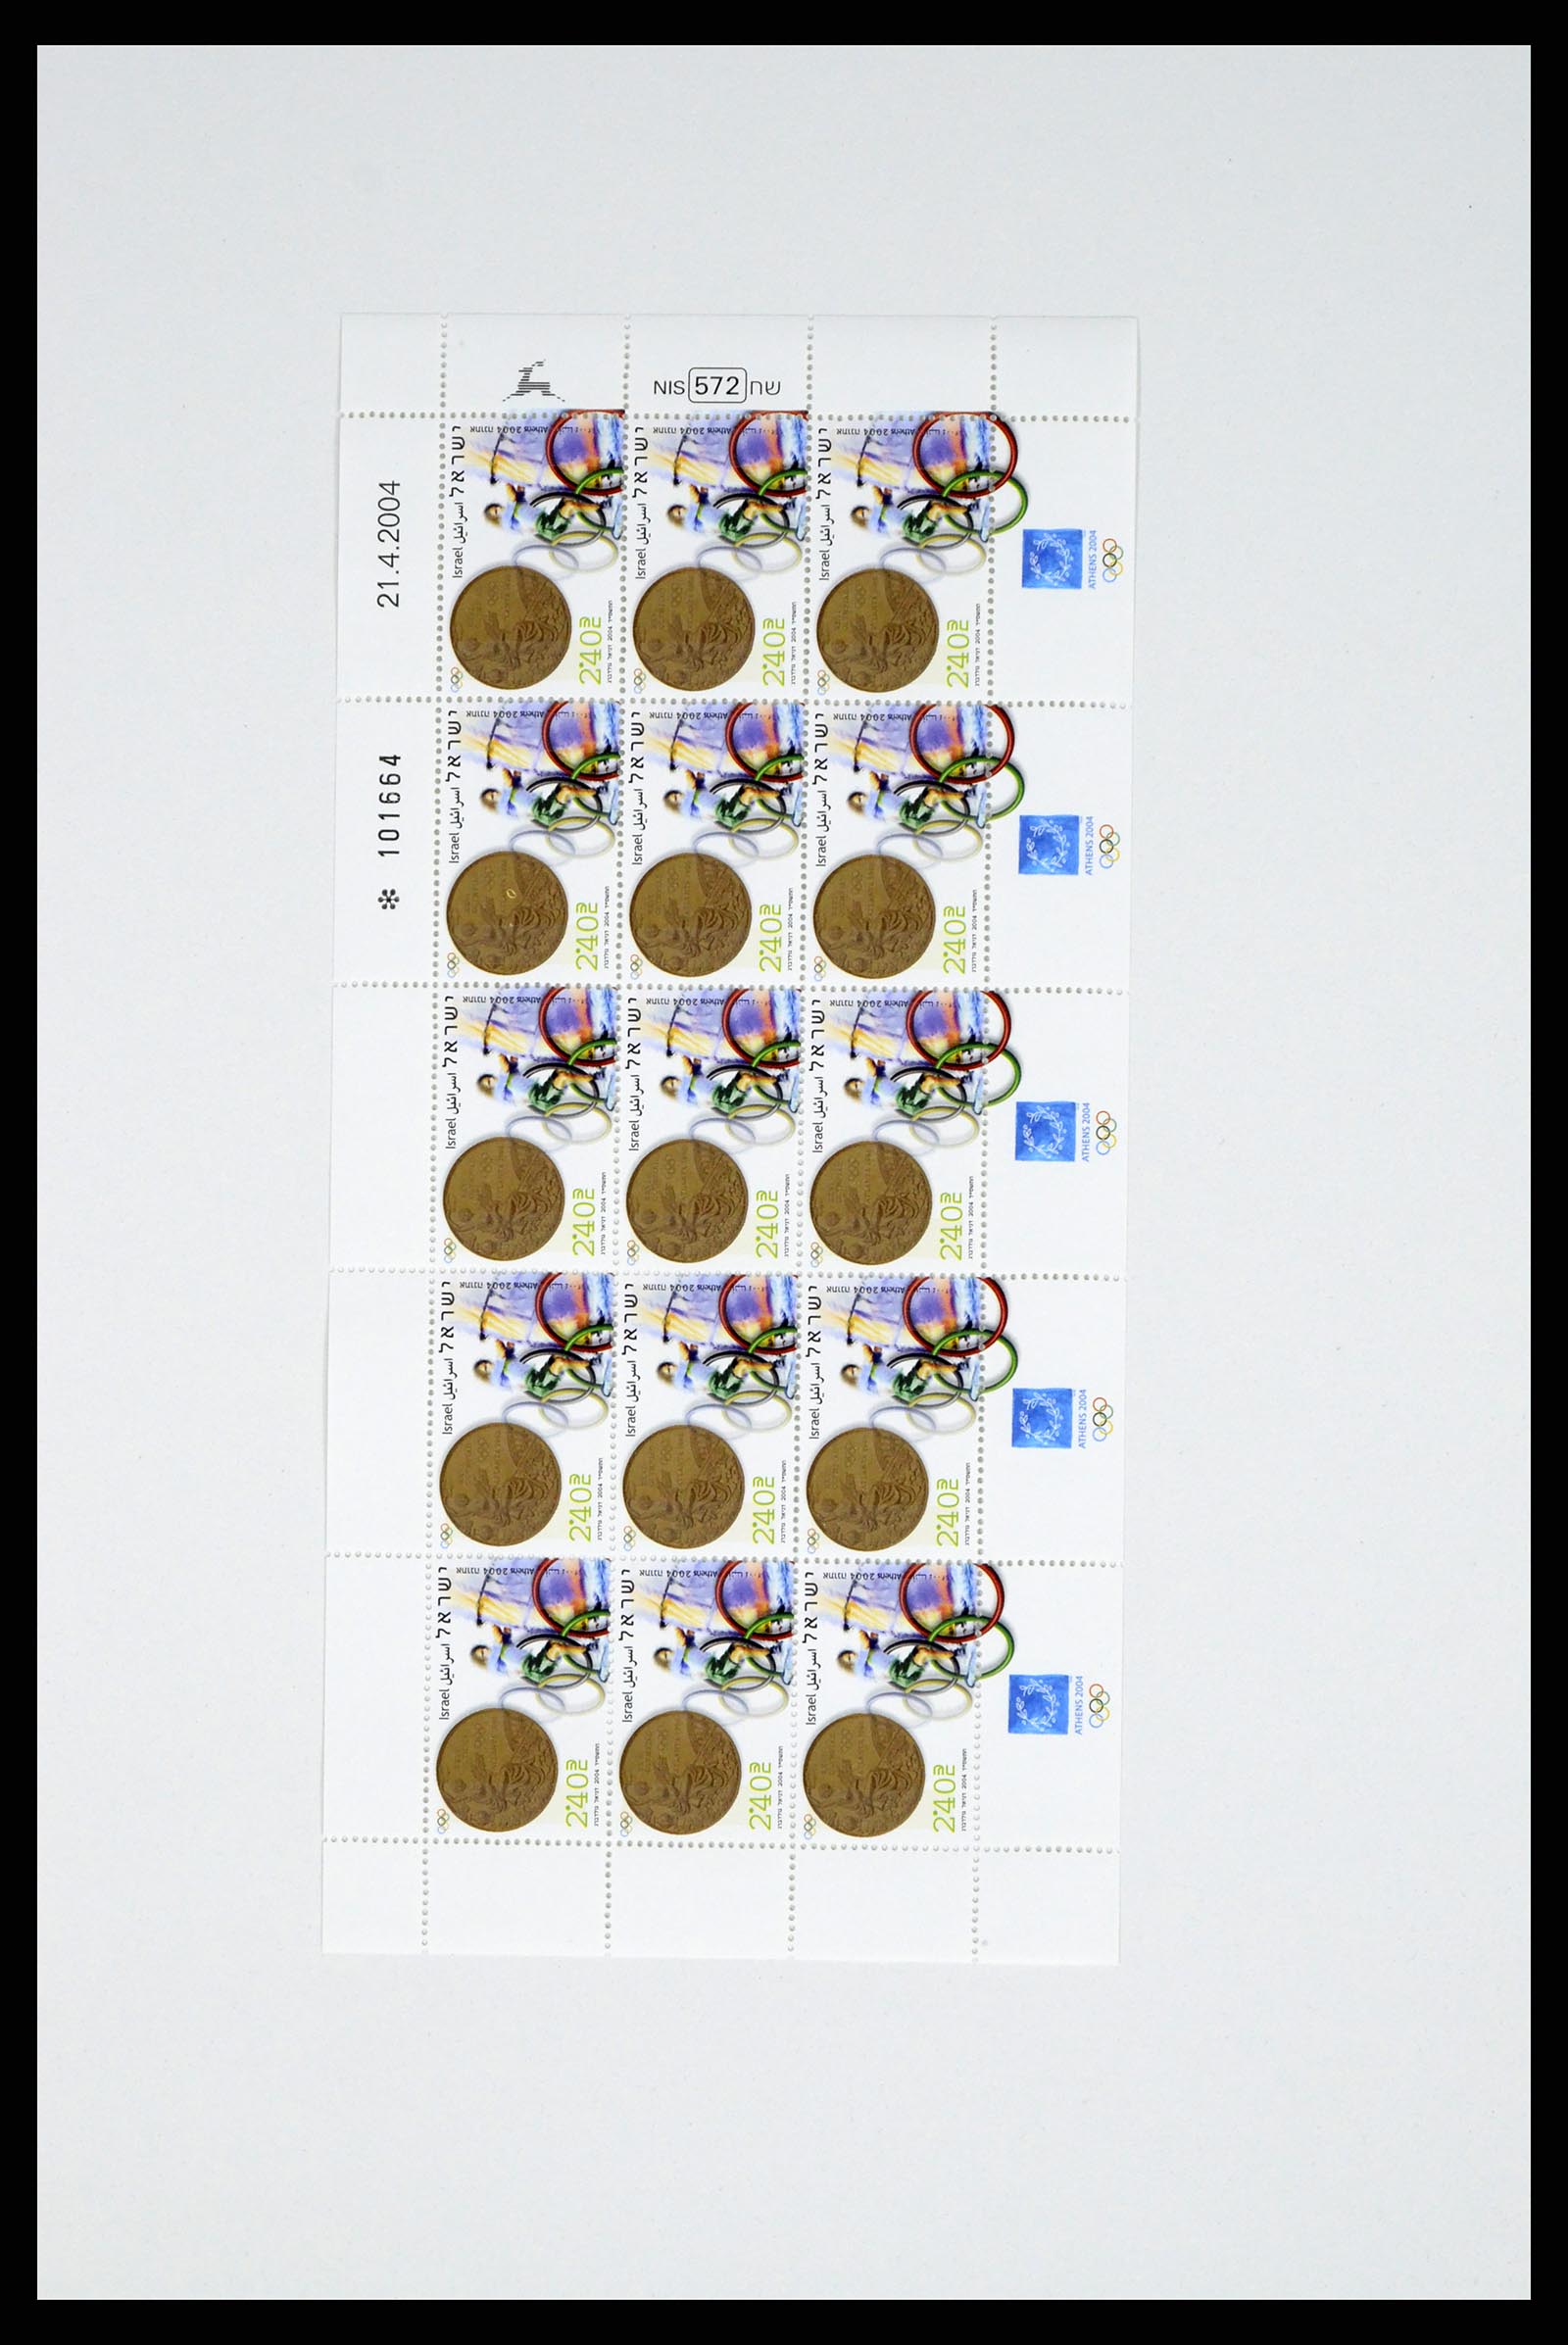 37779 339 - Stamp collection 37779 Israel sheetlets 1986-2009.